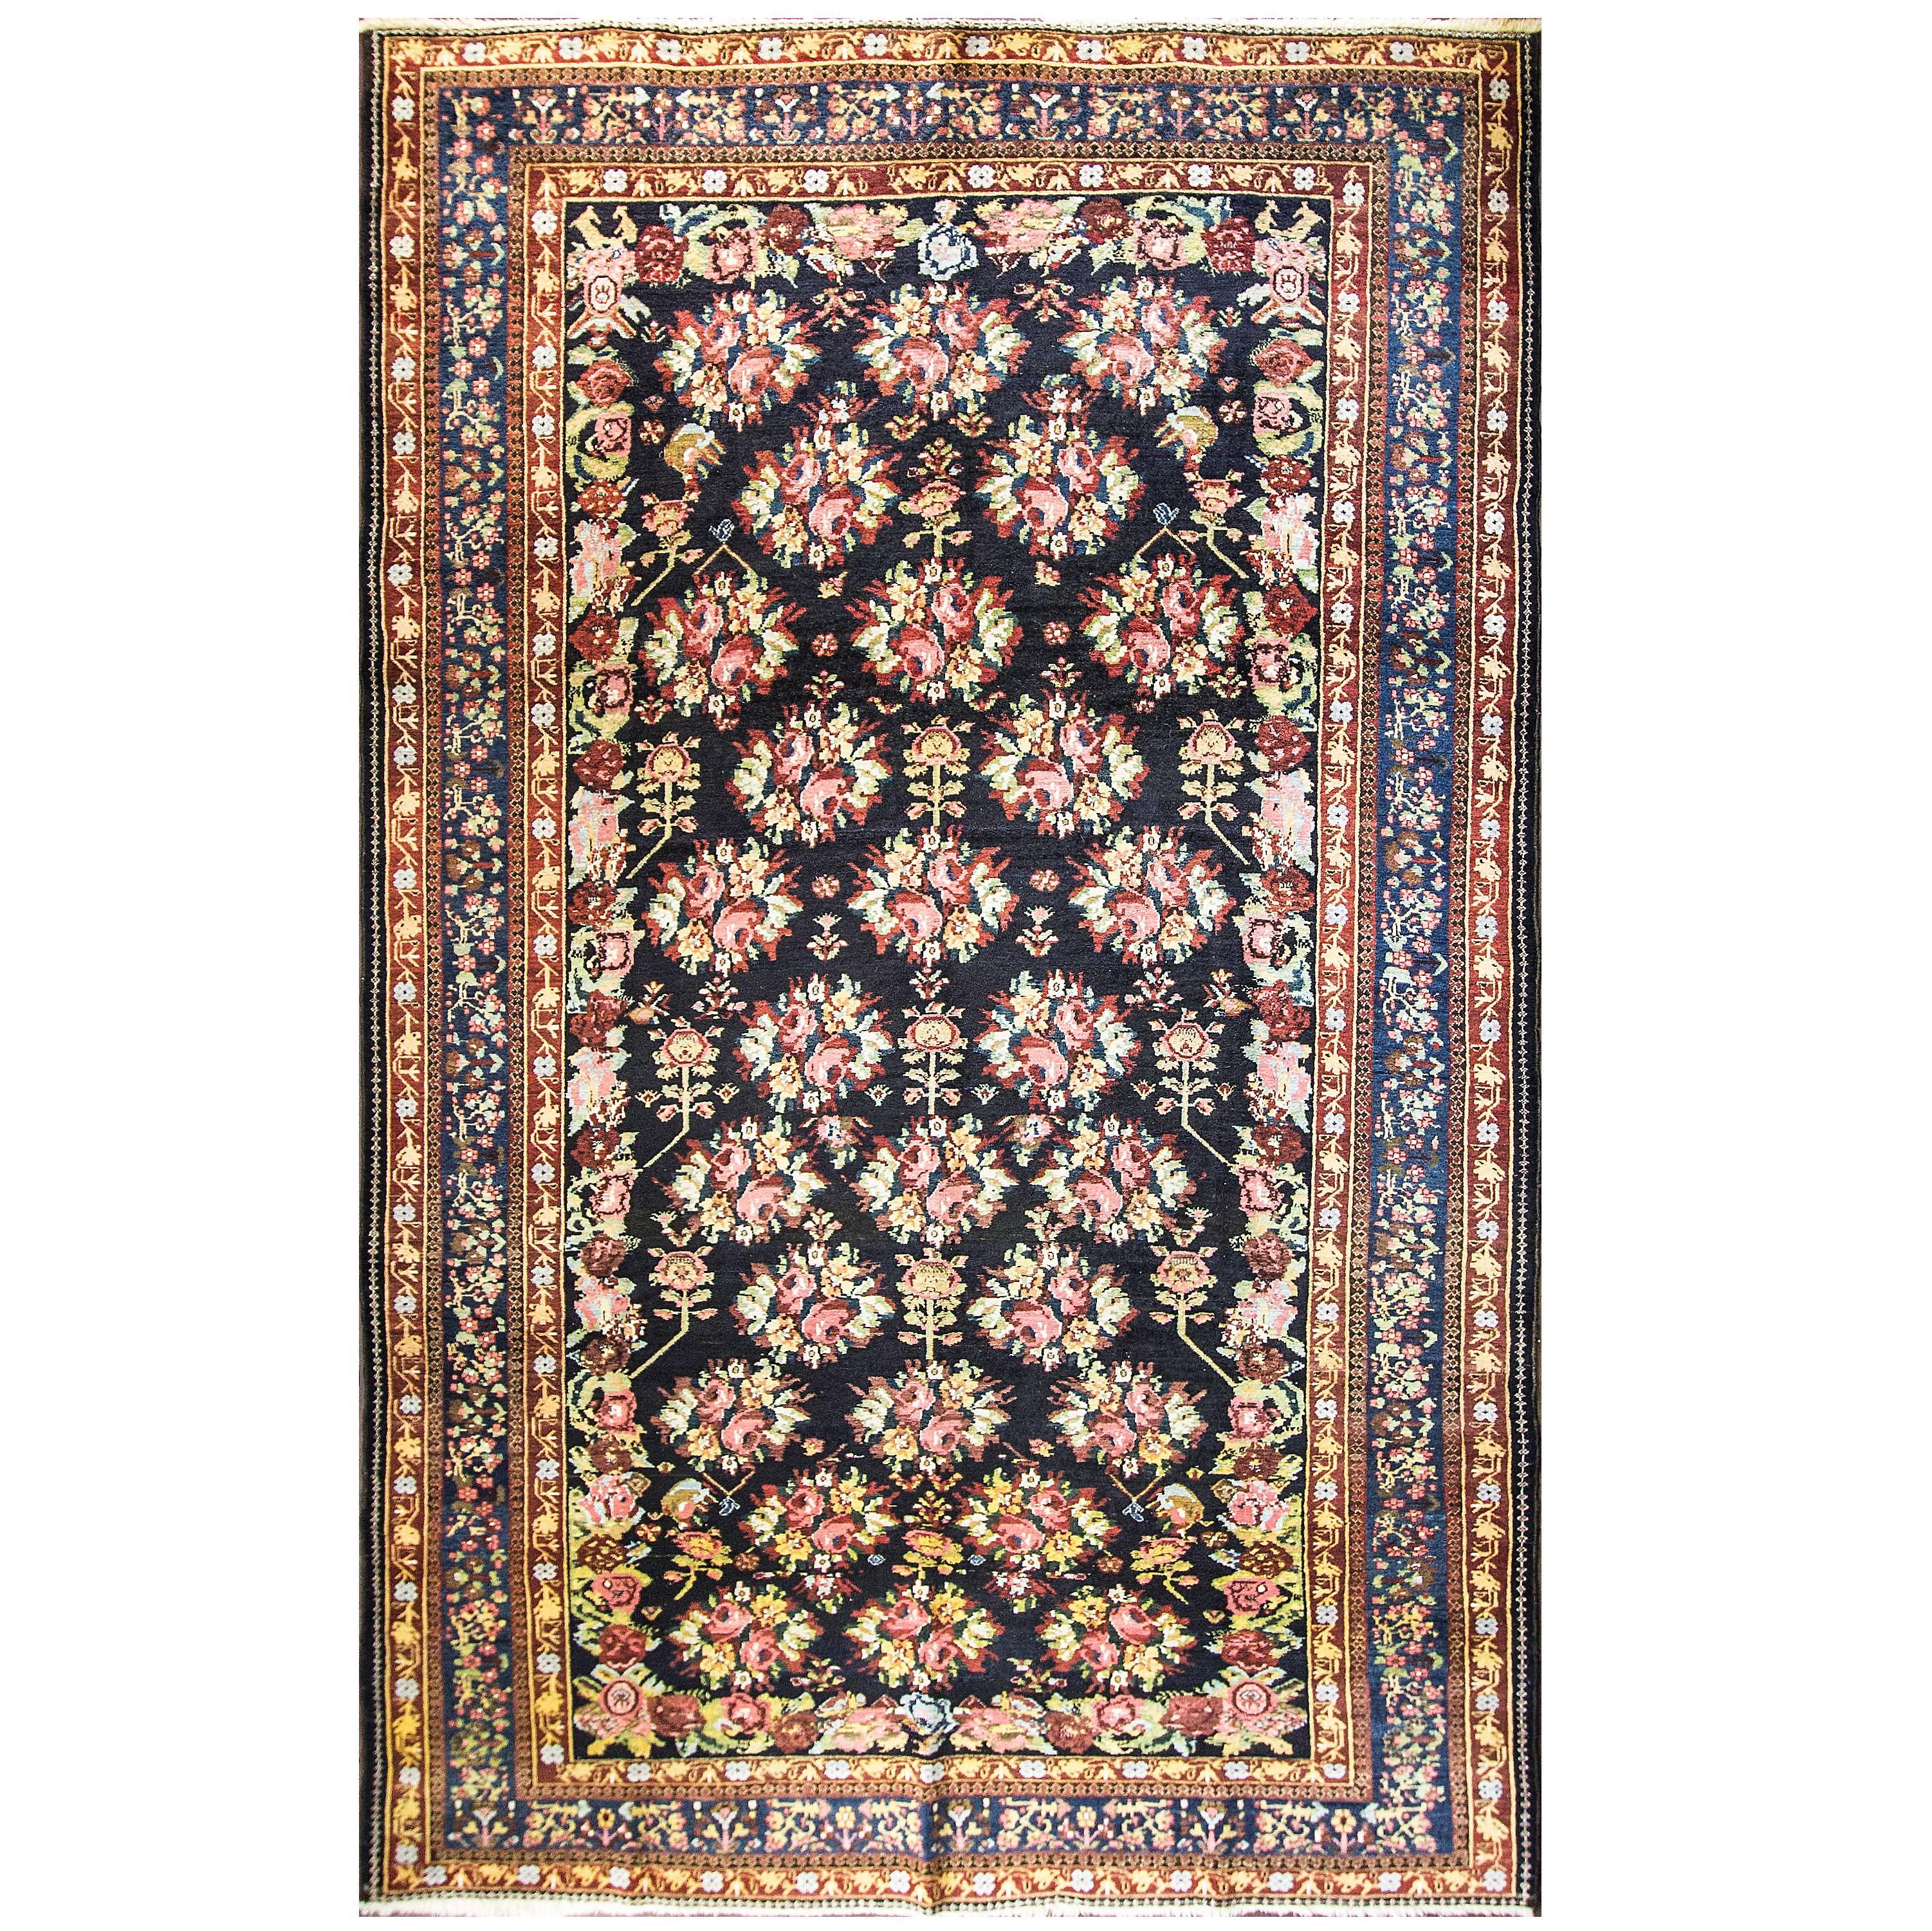 Antique Persian Baktiari Carpet, 7'3" x 11'6" For Sale